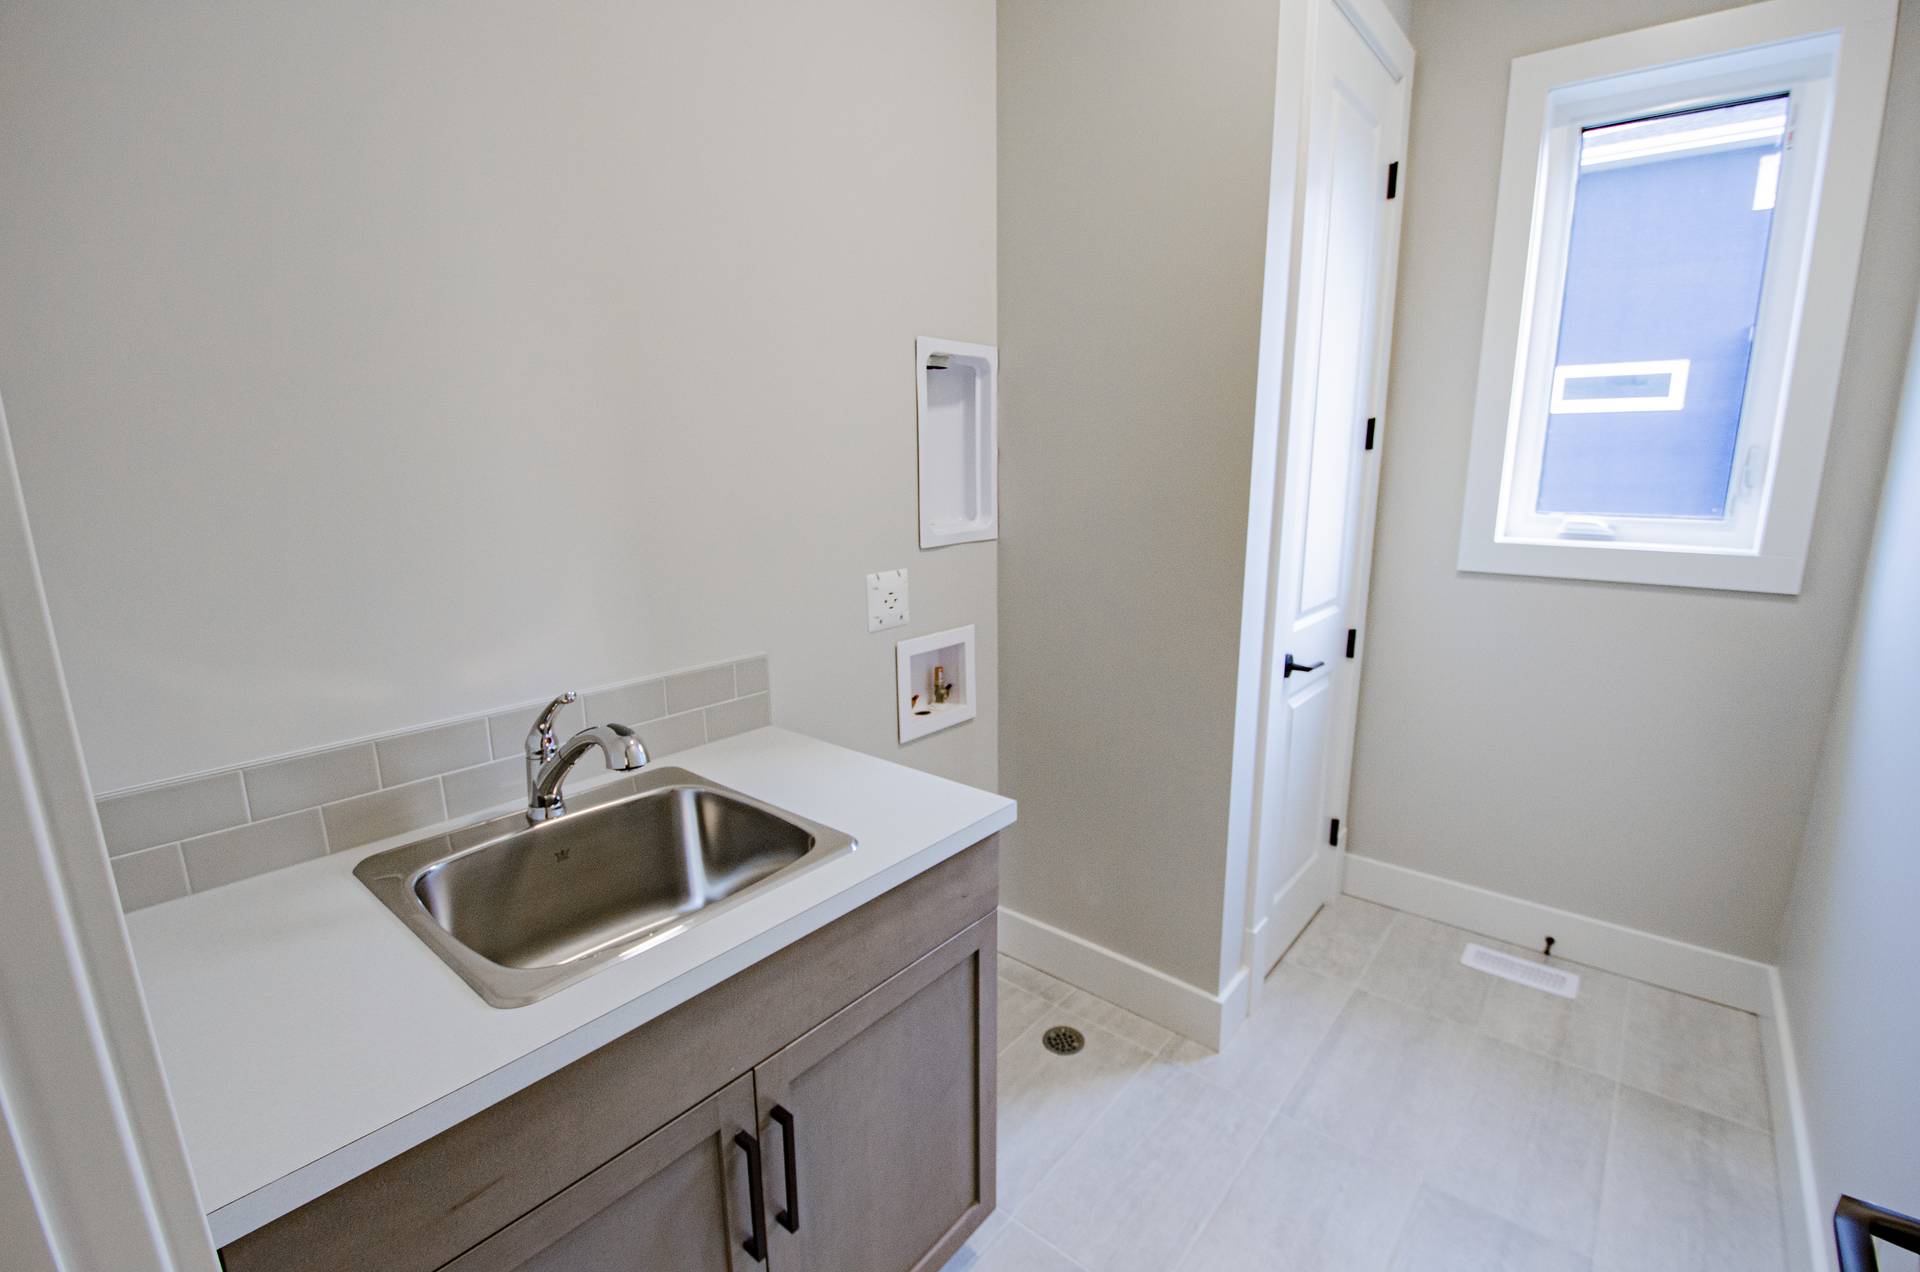 Bathroom renovations in Calgary